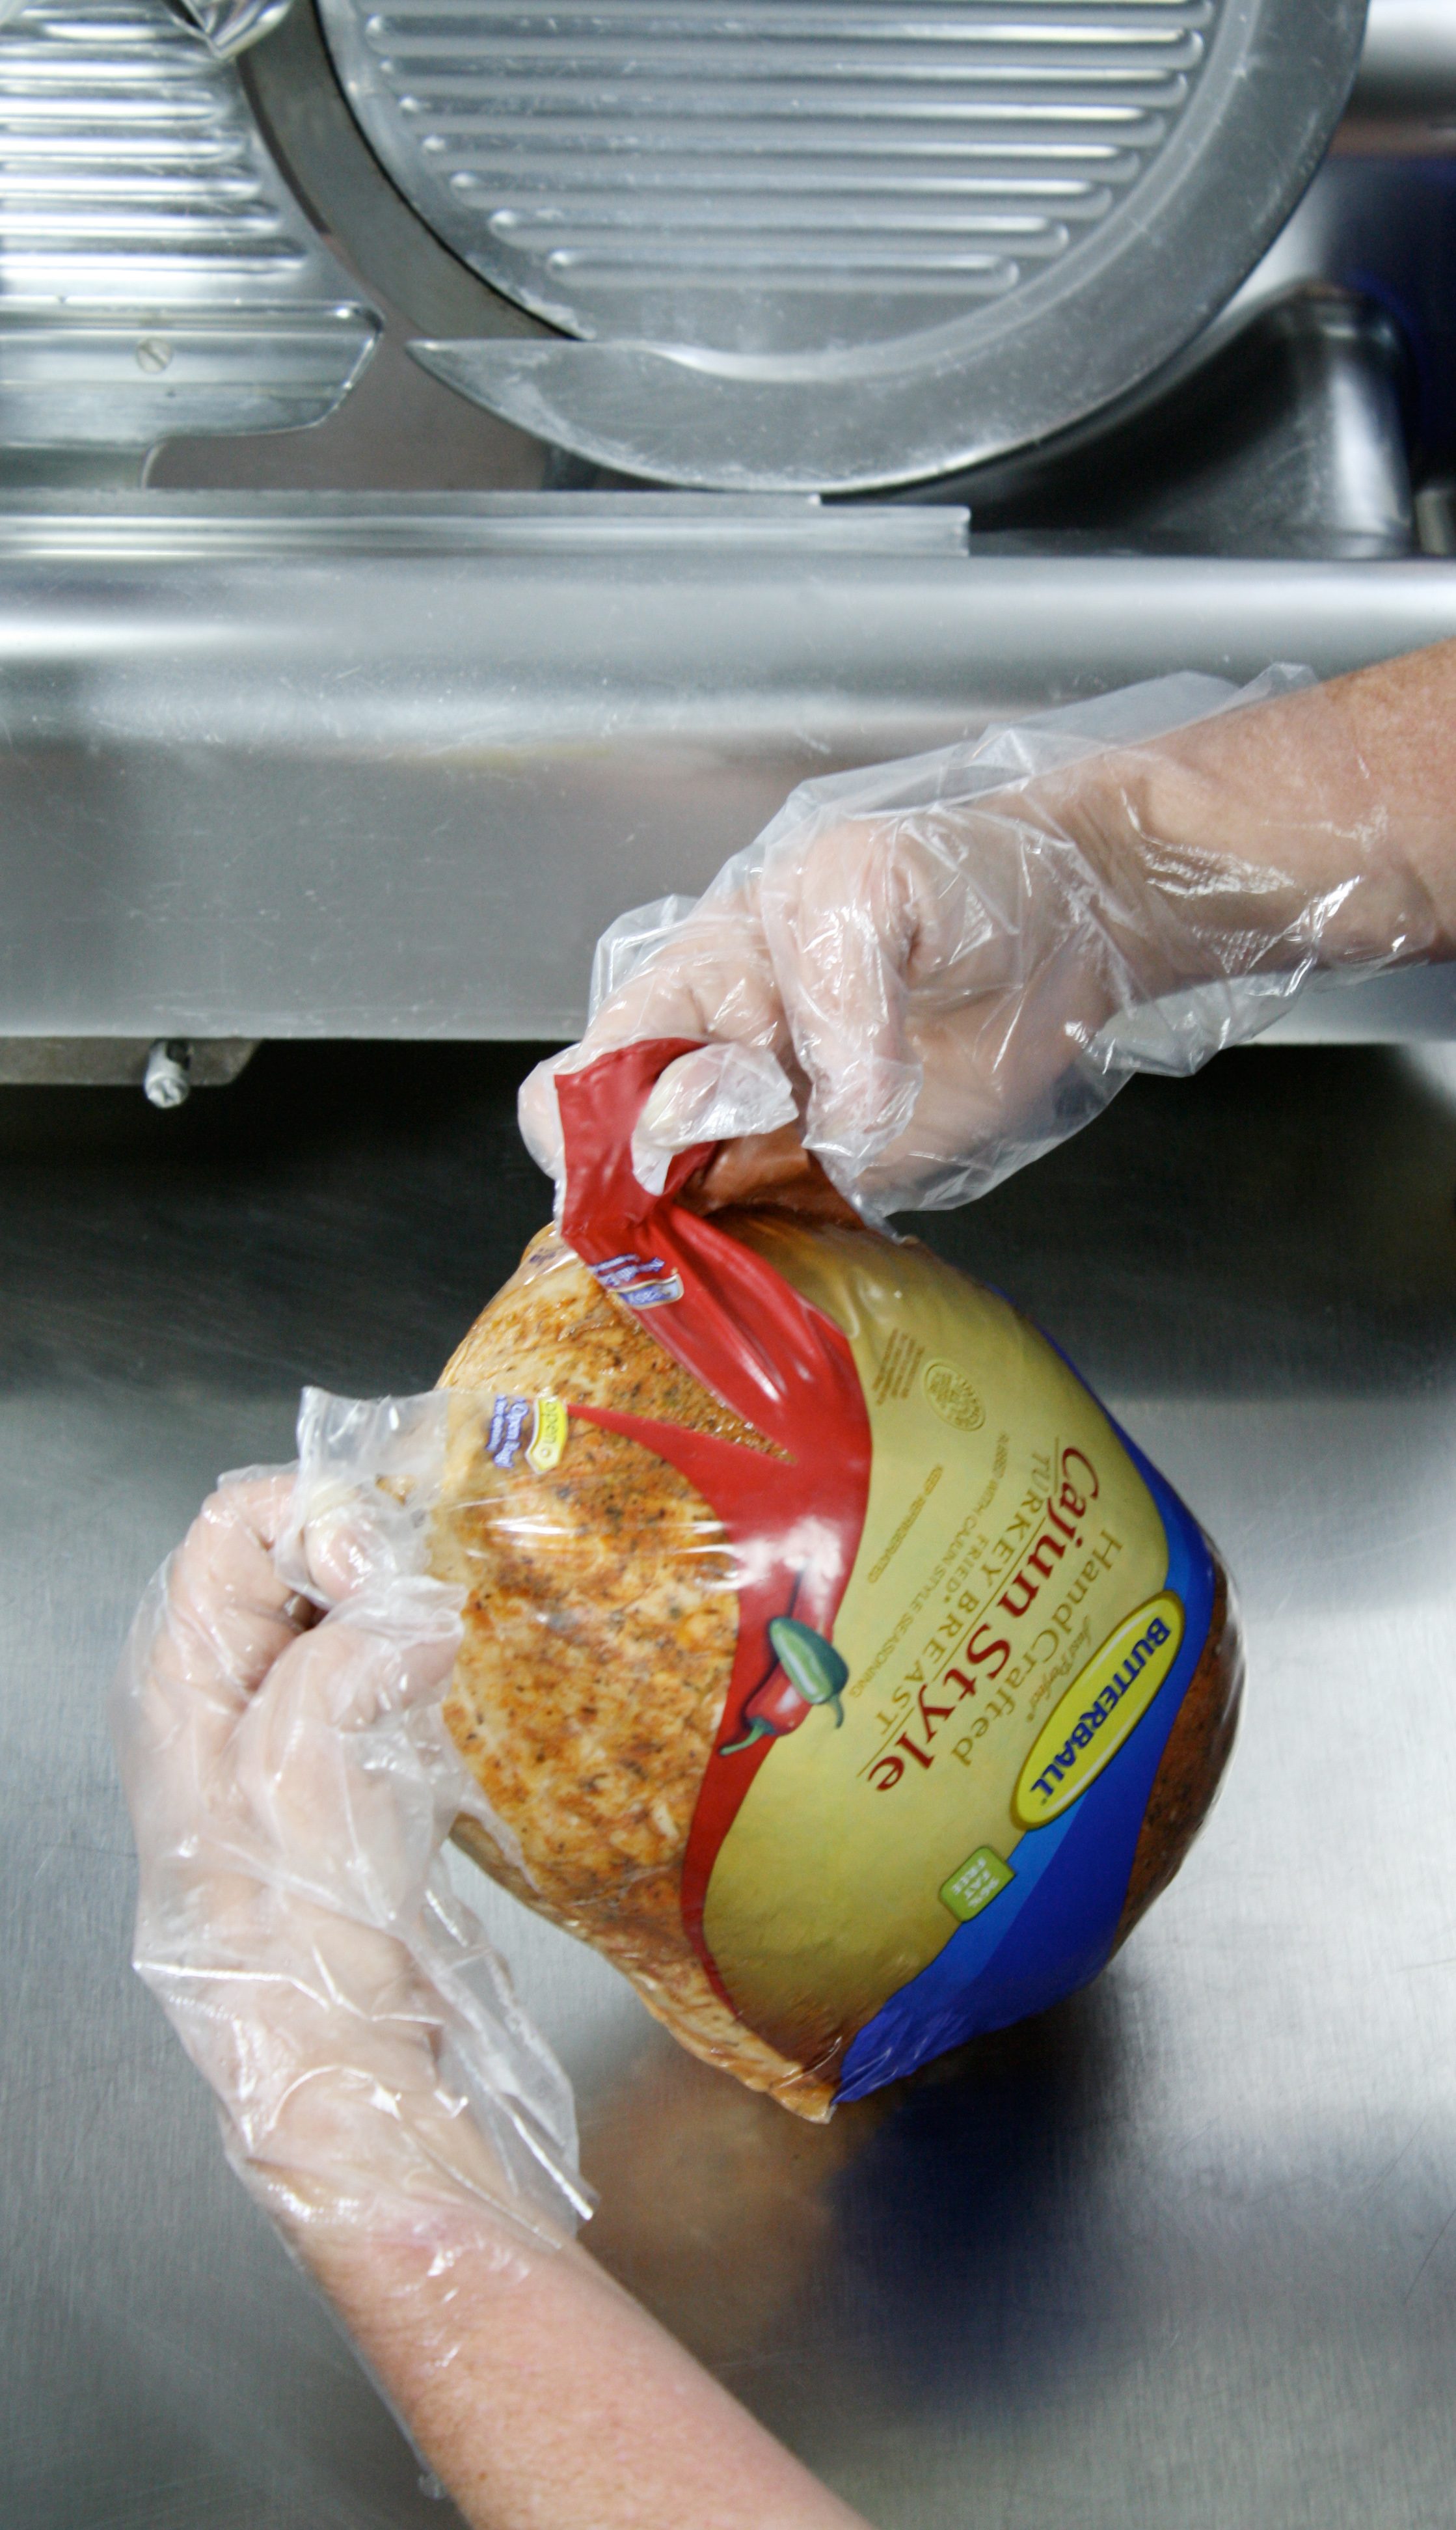 deli worker opening a shrink bag of turkey breast